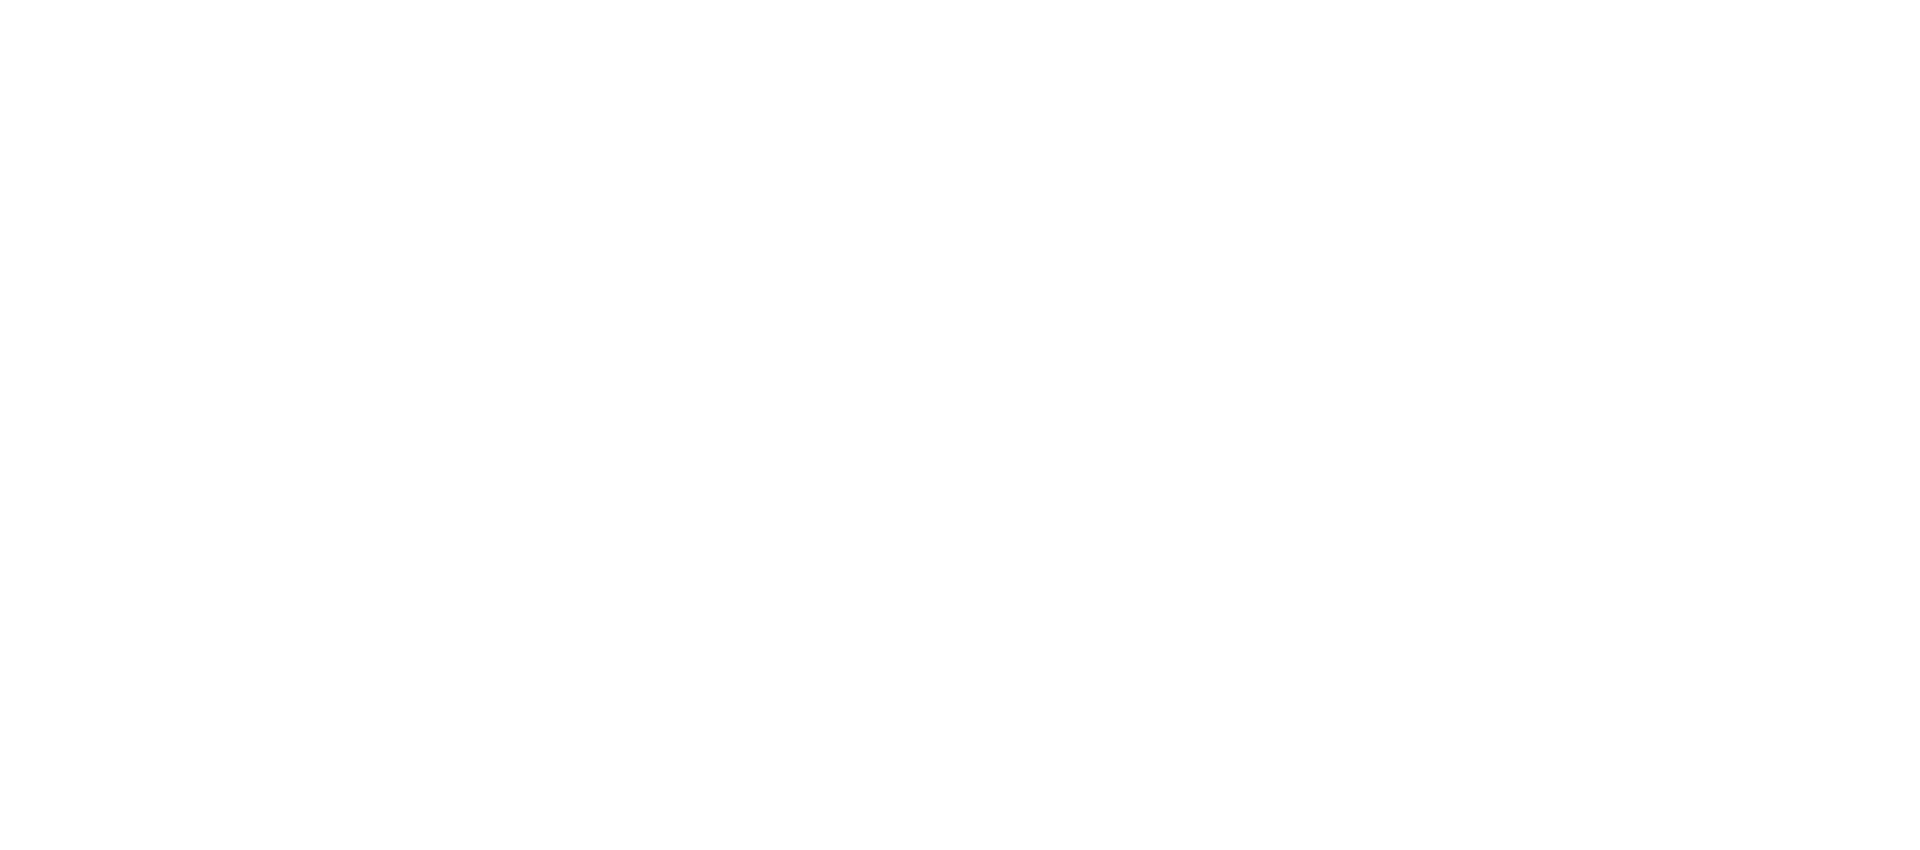 It’s Humanature